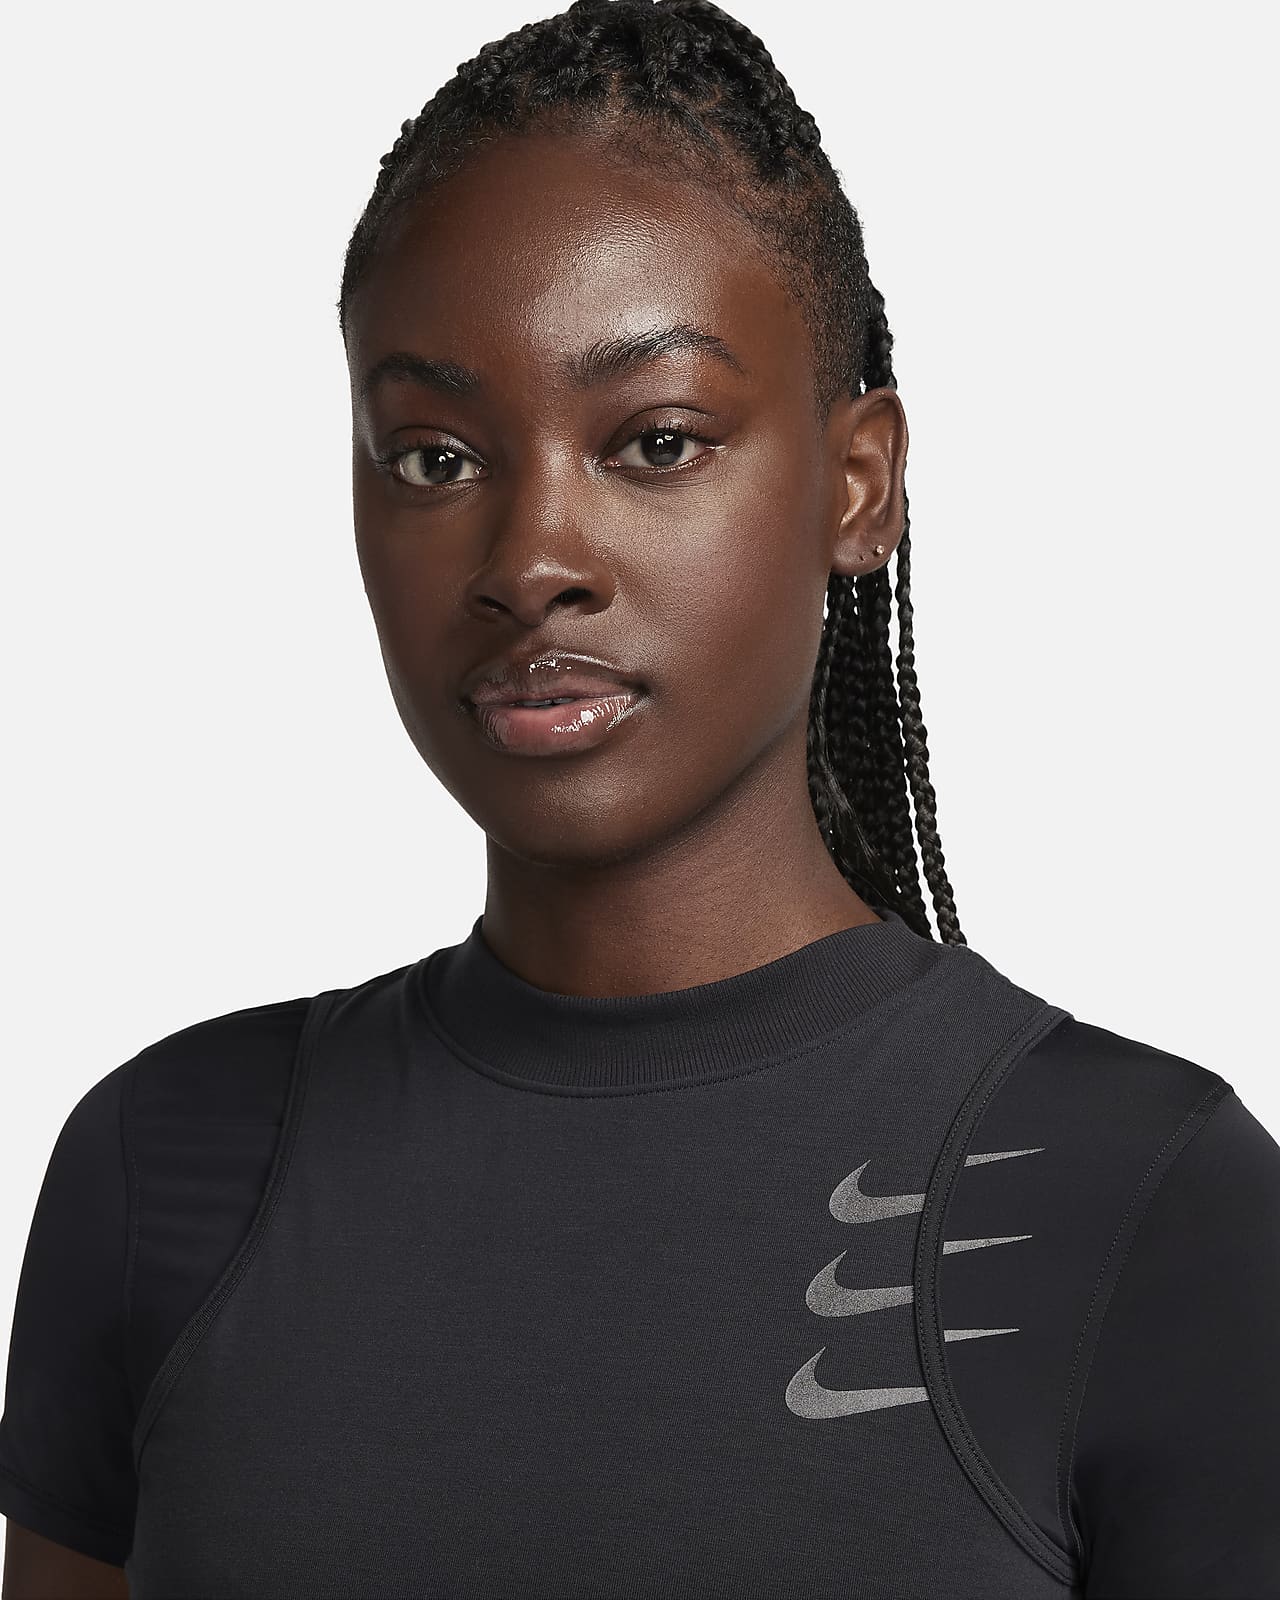 Nike Dri-FIT ADV Running Division Women's Short-Sleeve Running Top. Nike LU